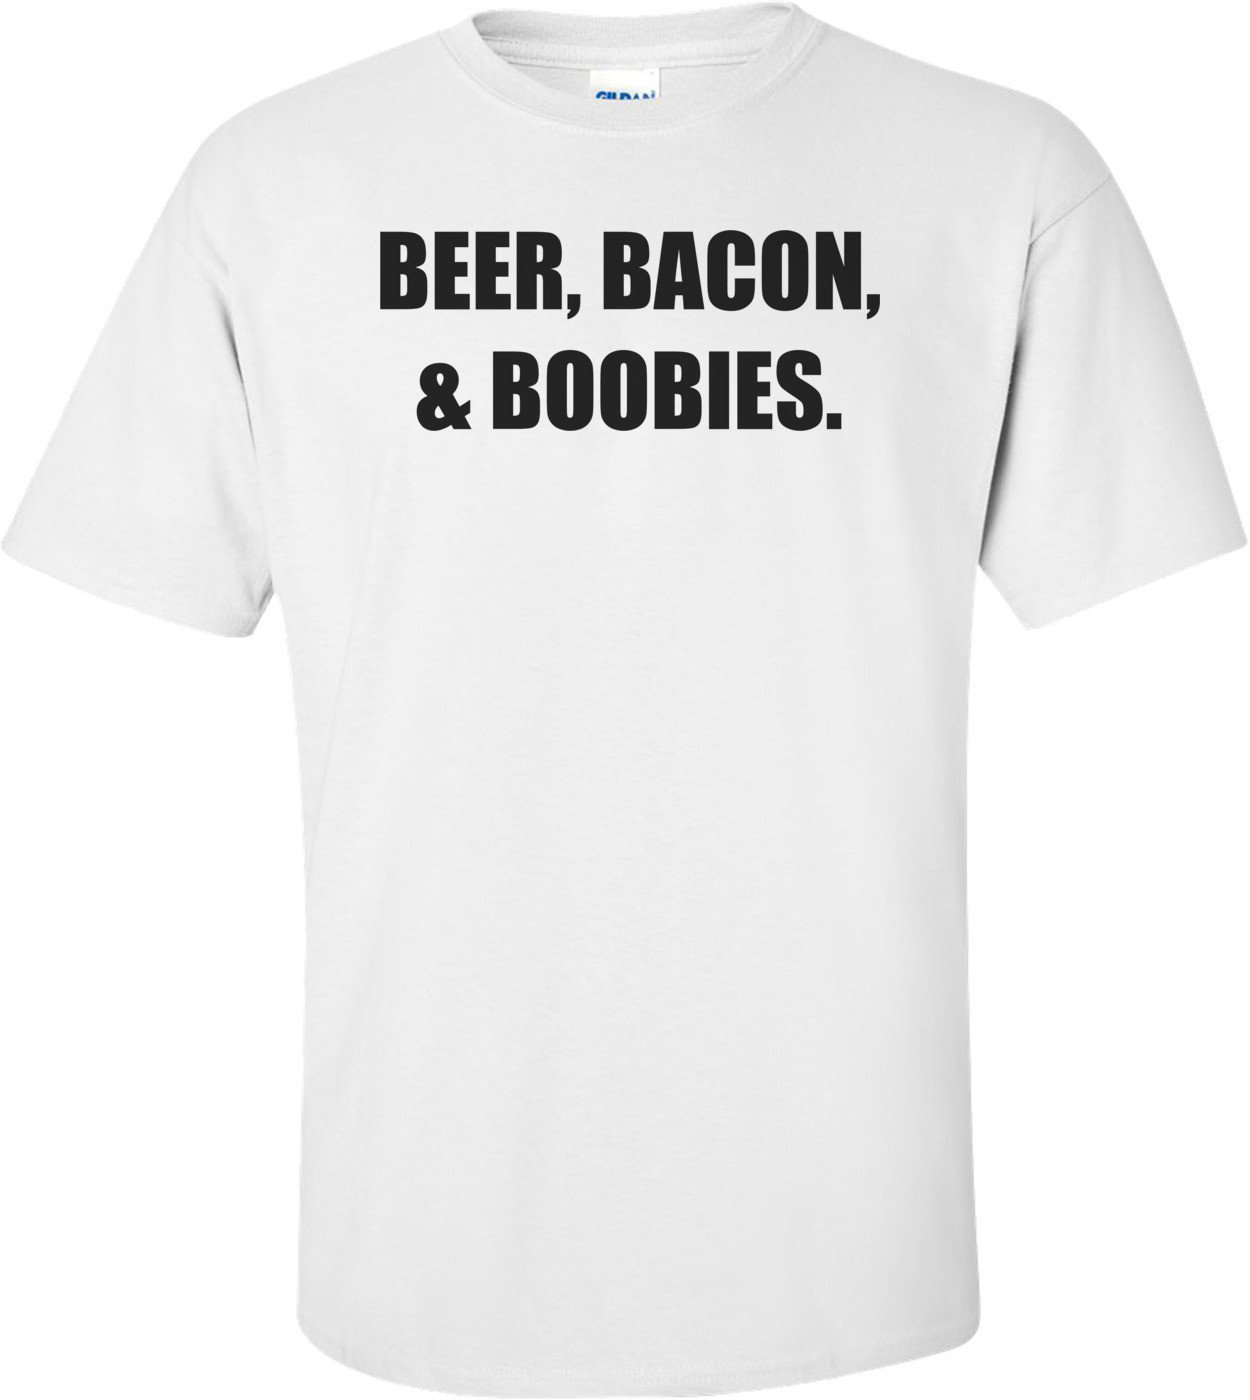 BEER, BACON, & BOOBIES. Shirt